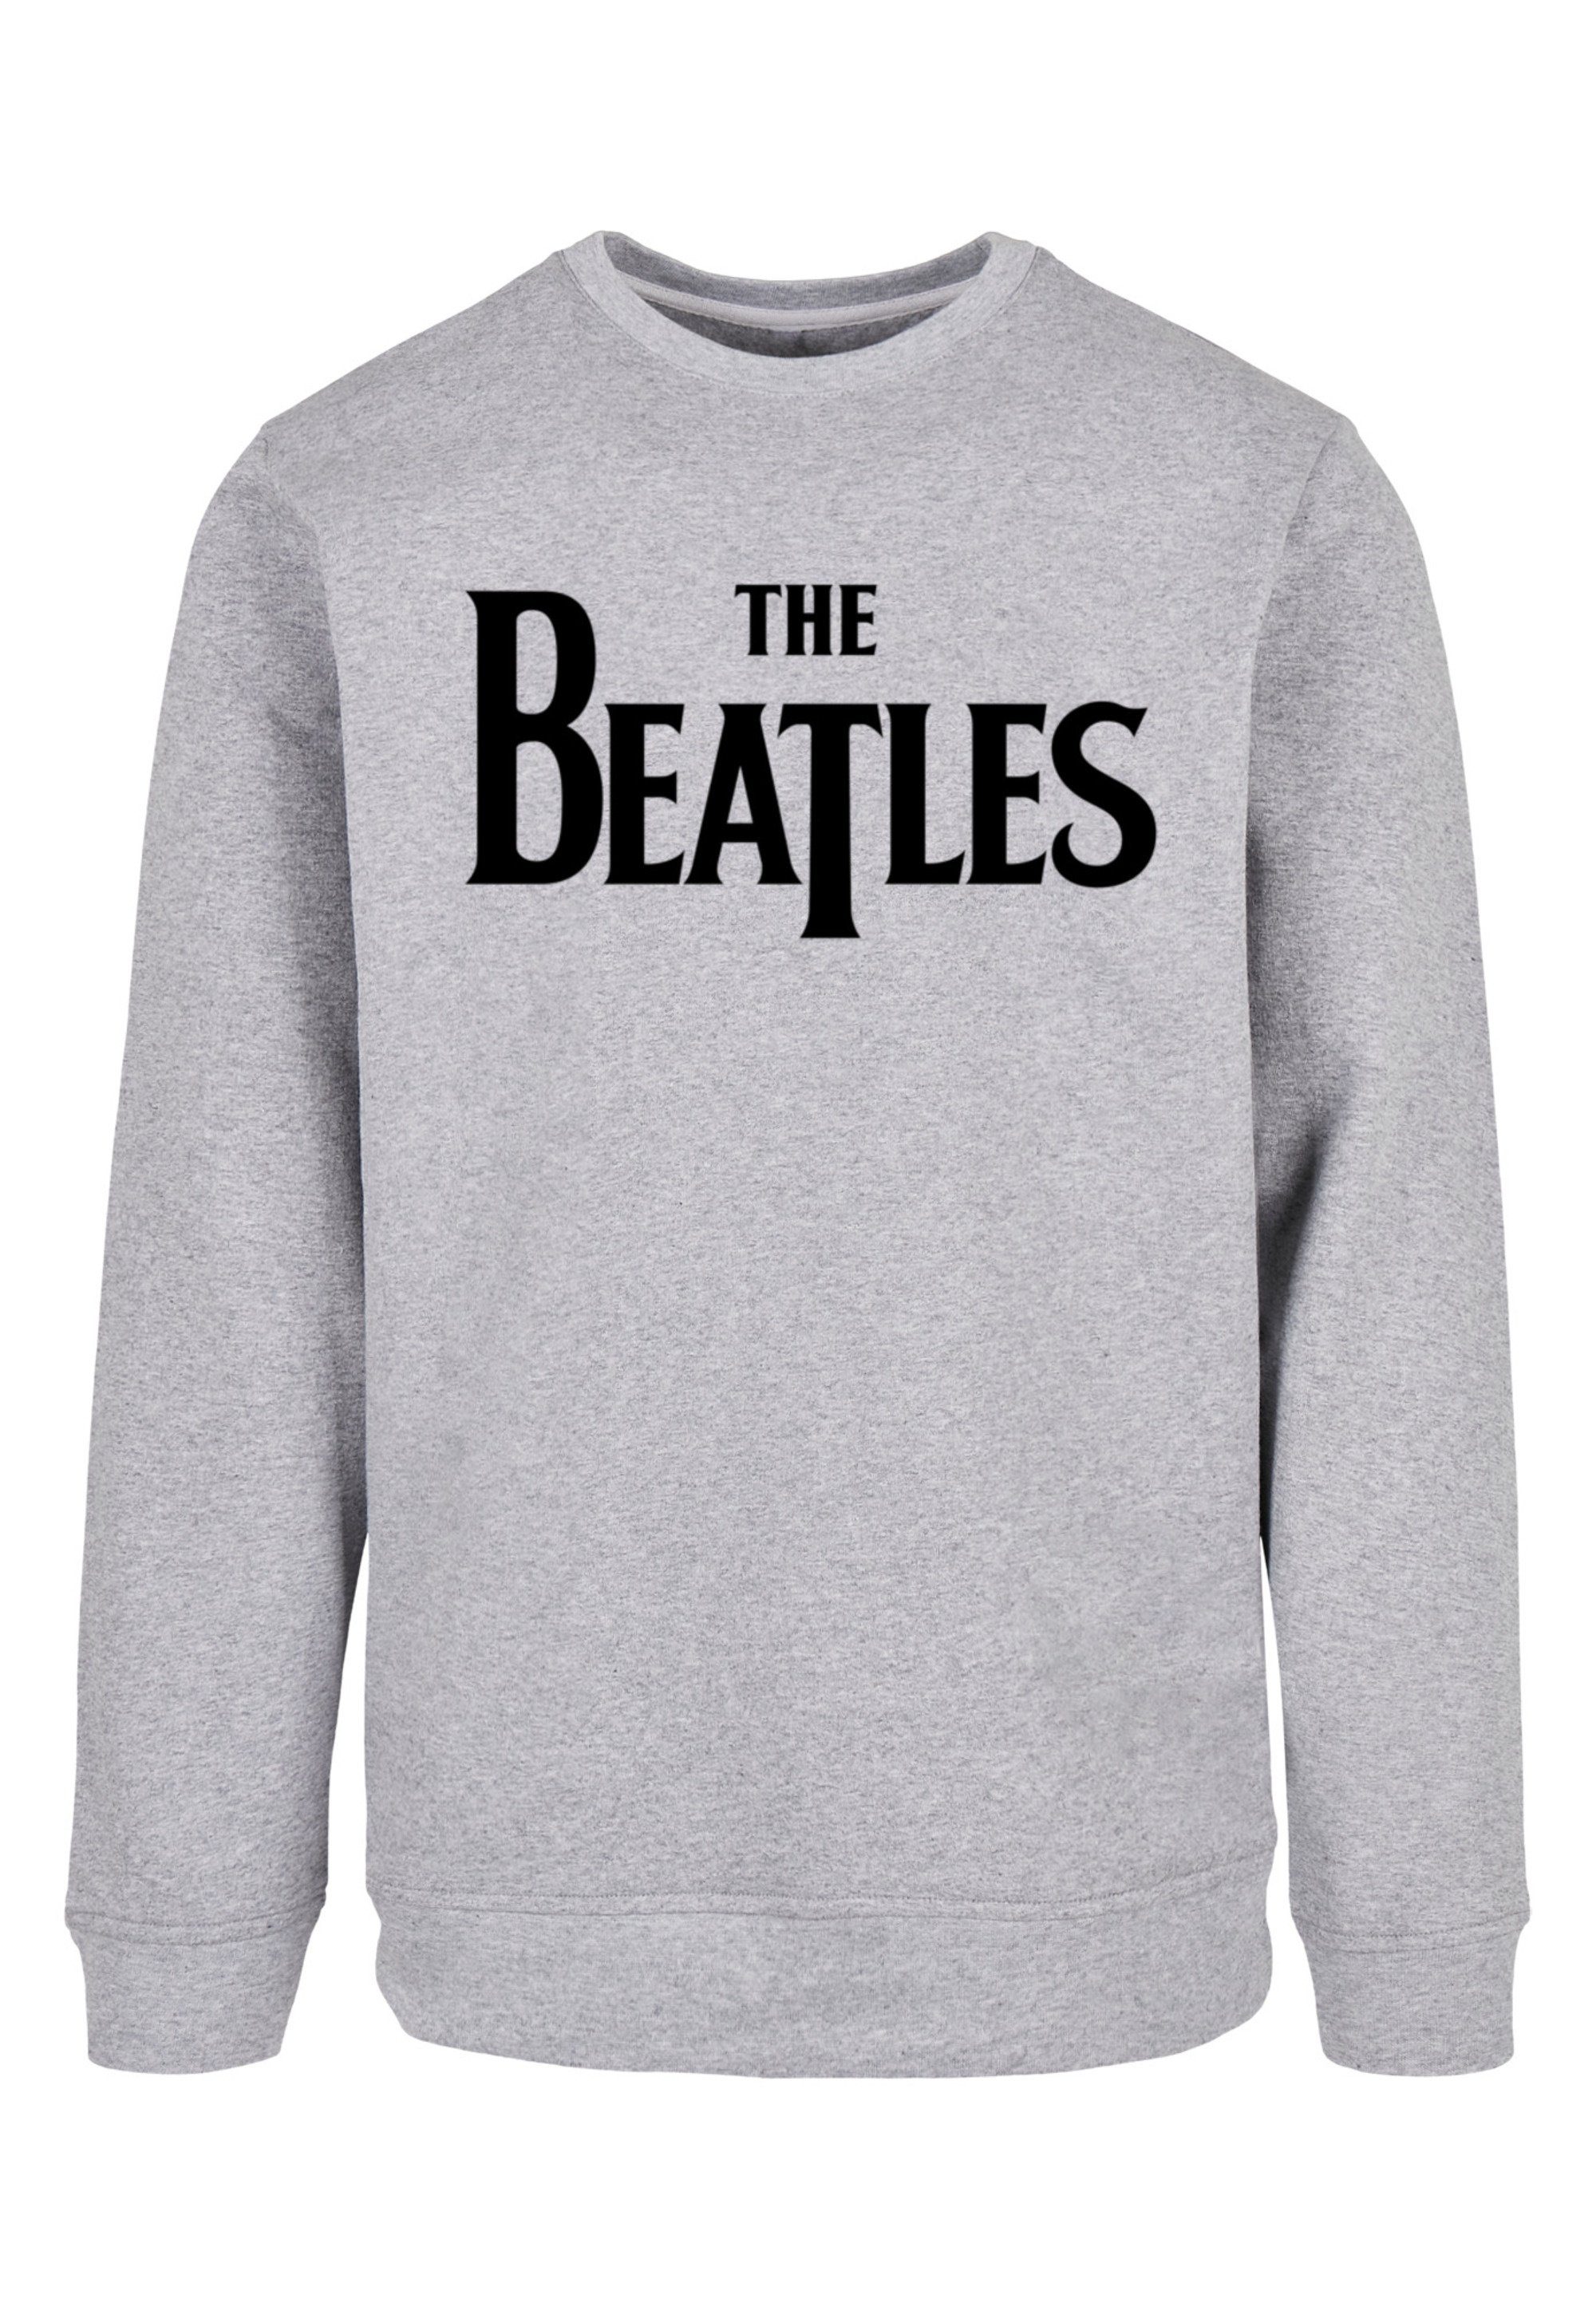 The Band Drop Sweatshirt Beatles Beatles Black Kapuzenpullover Logo F4NT4STIC Offiziell The Print, lizenziertes T